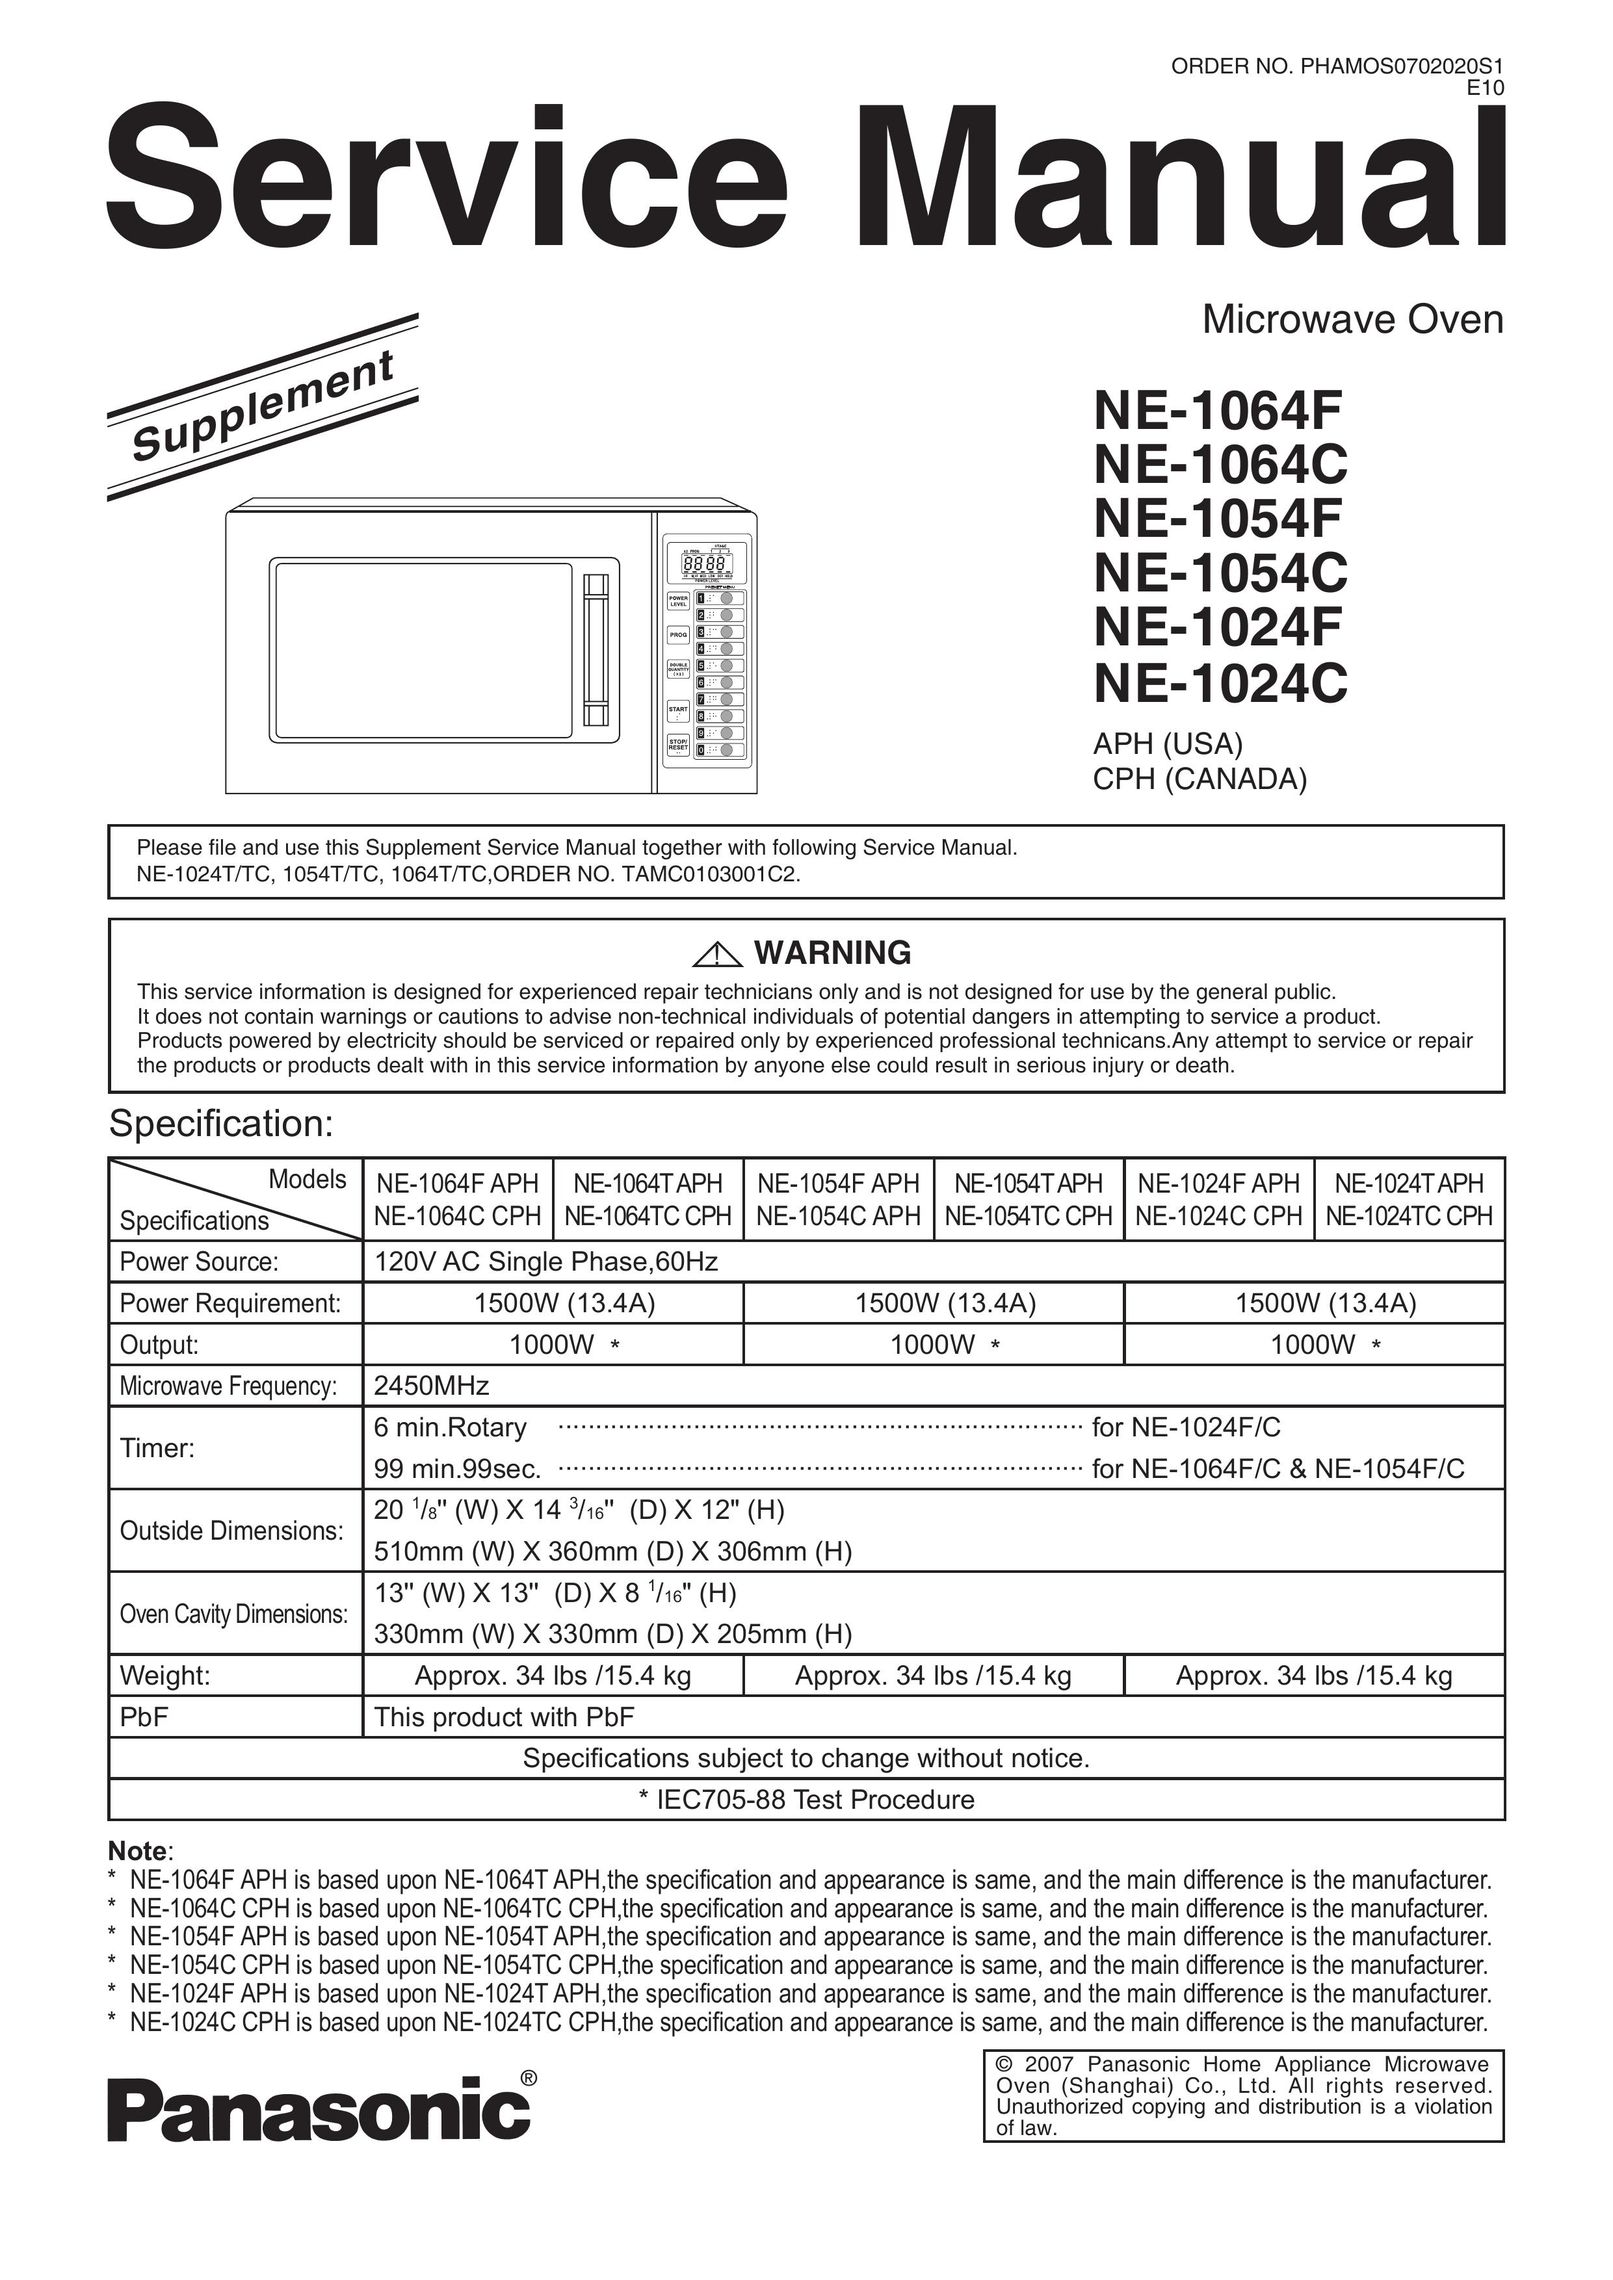 Panasonic NE-1064F Microwave Oven User Manual